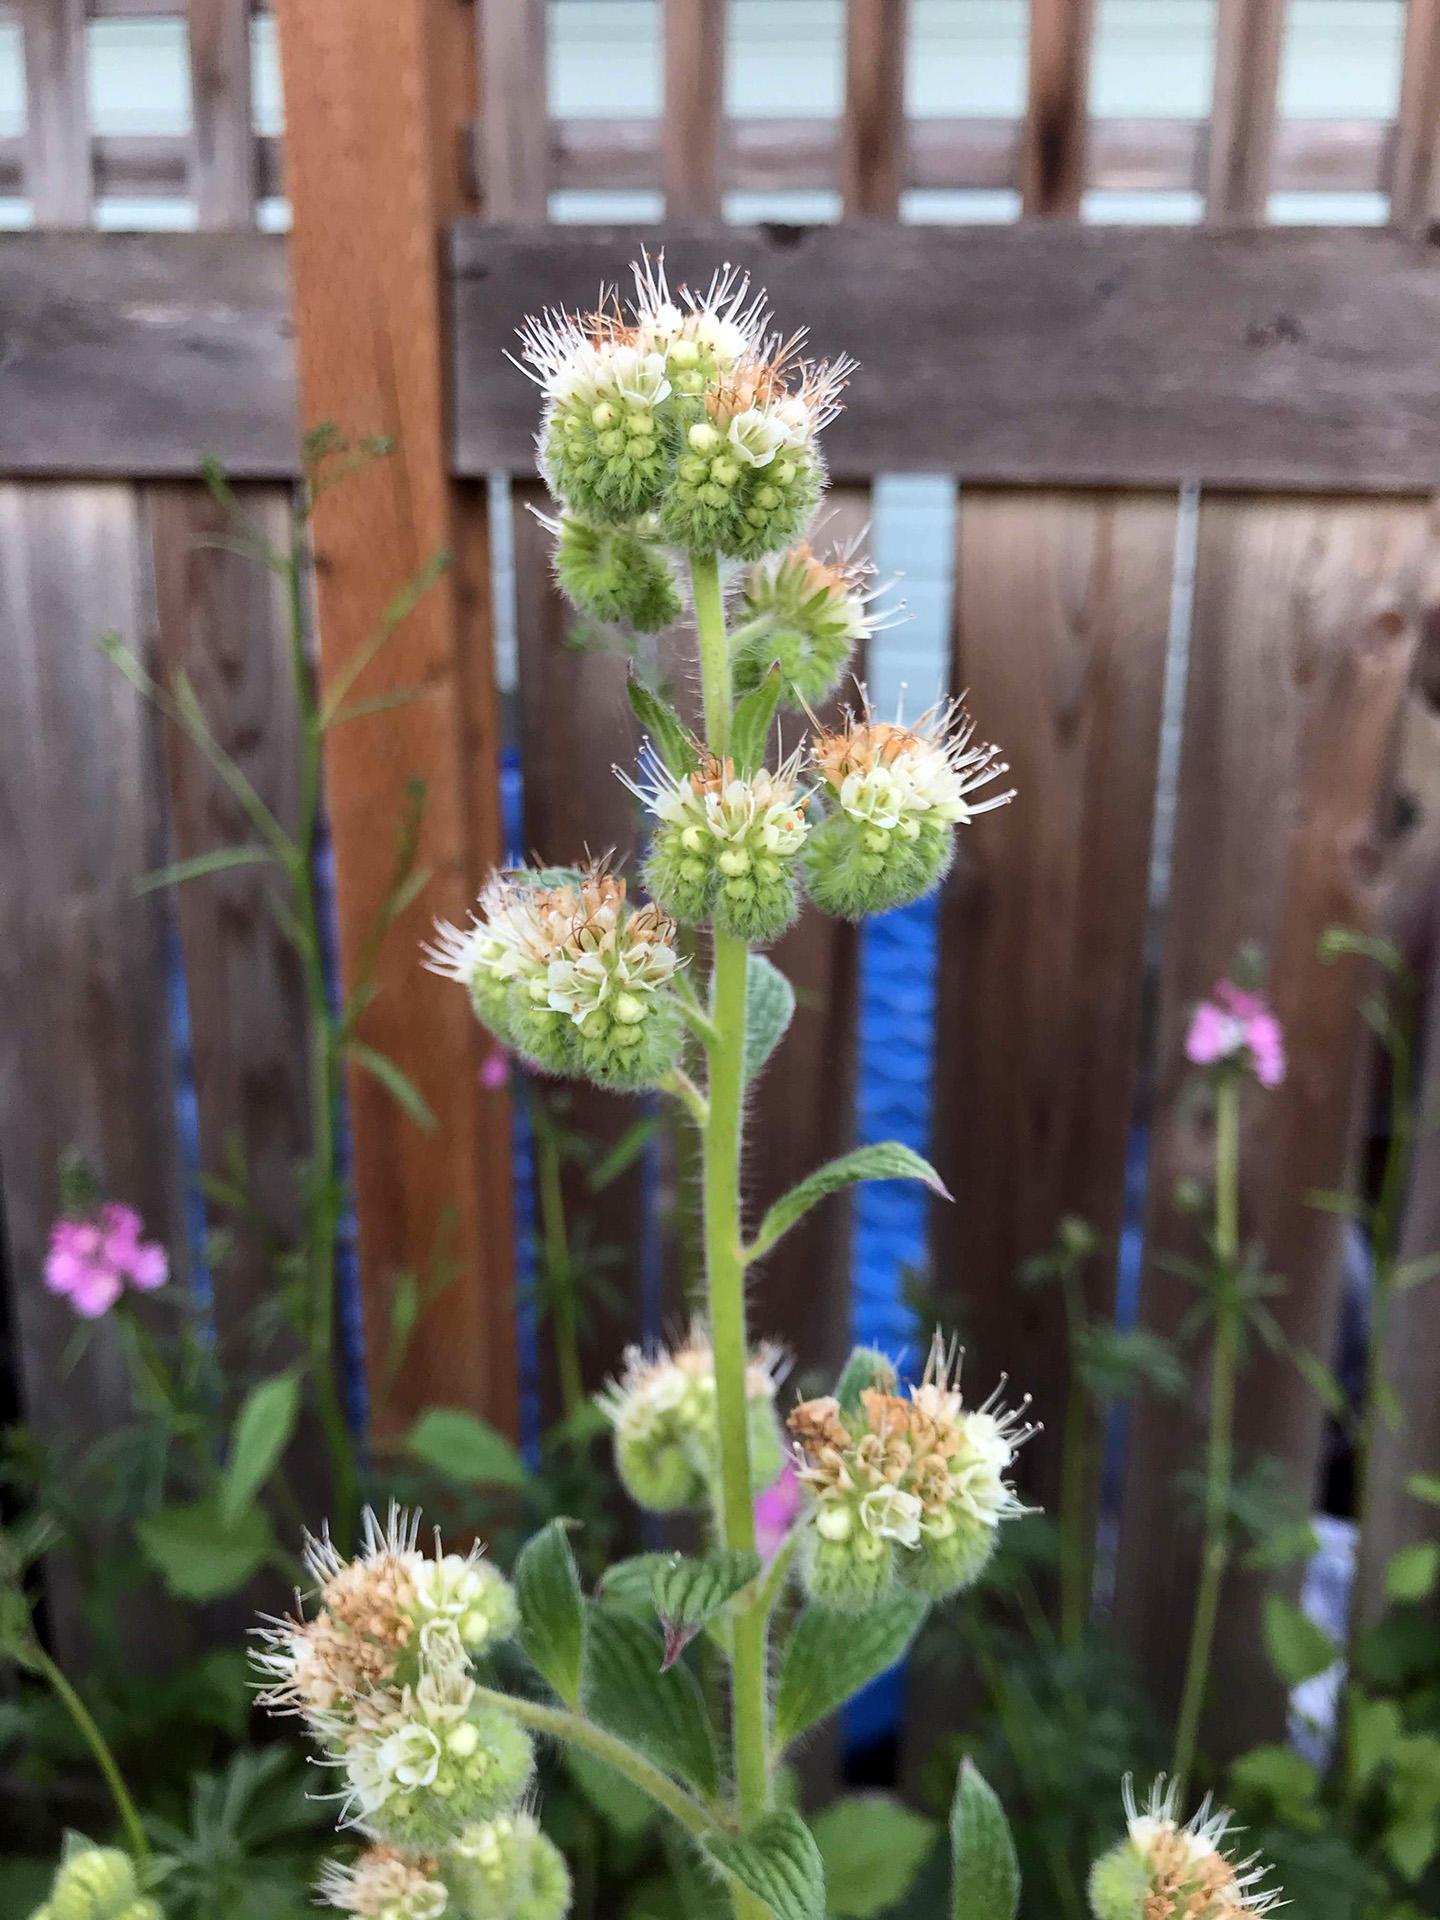 fuzzy green plant with nondescript white scorpiod flowers